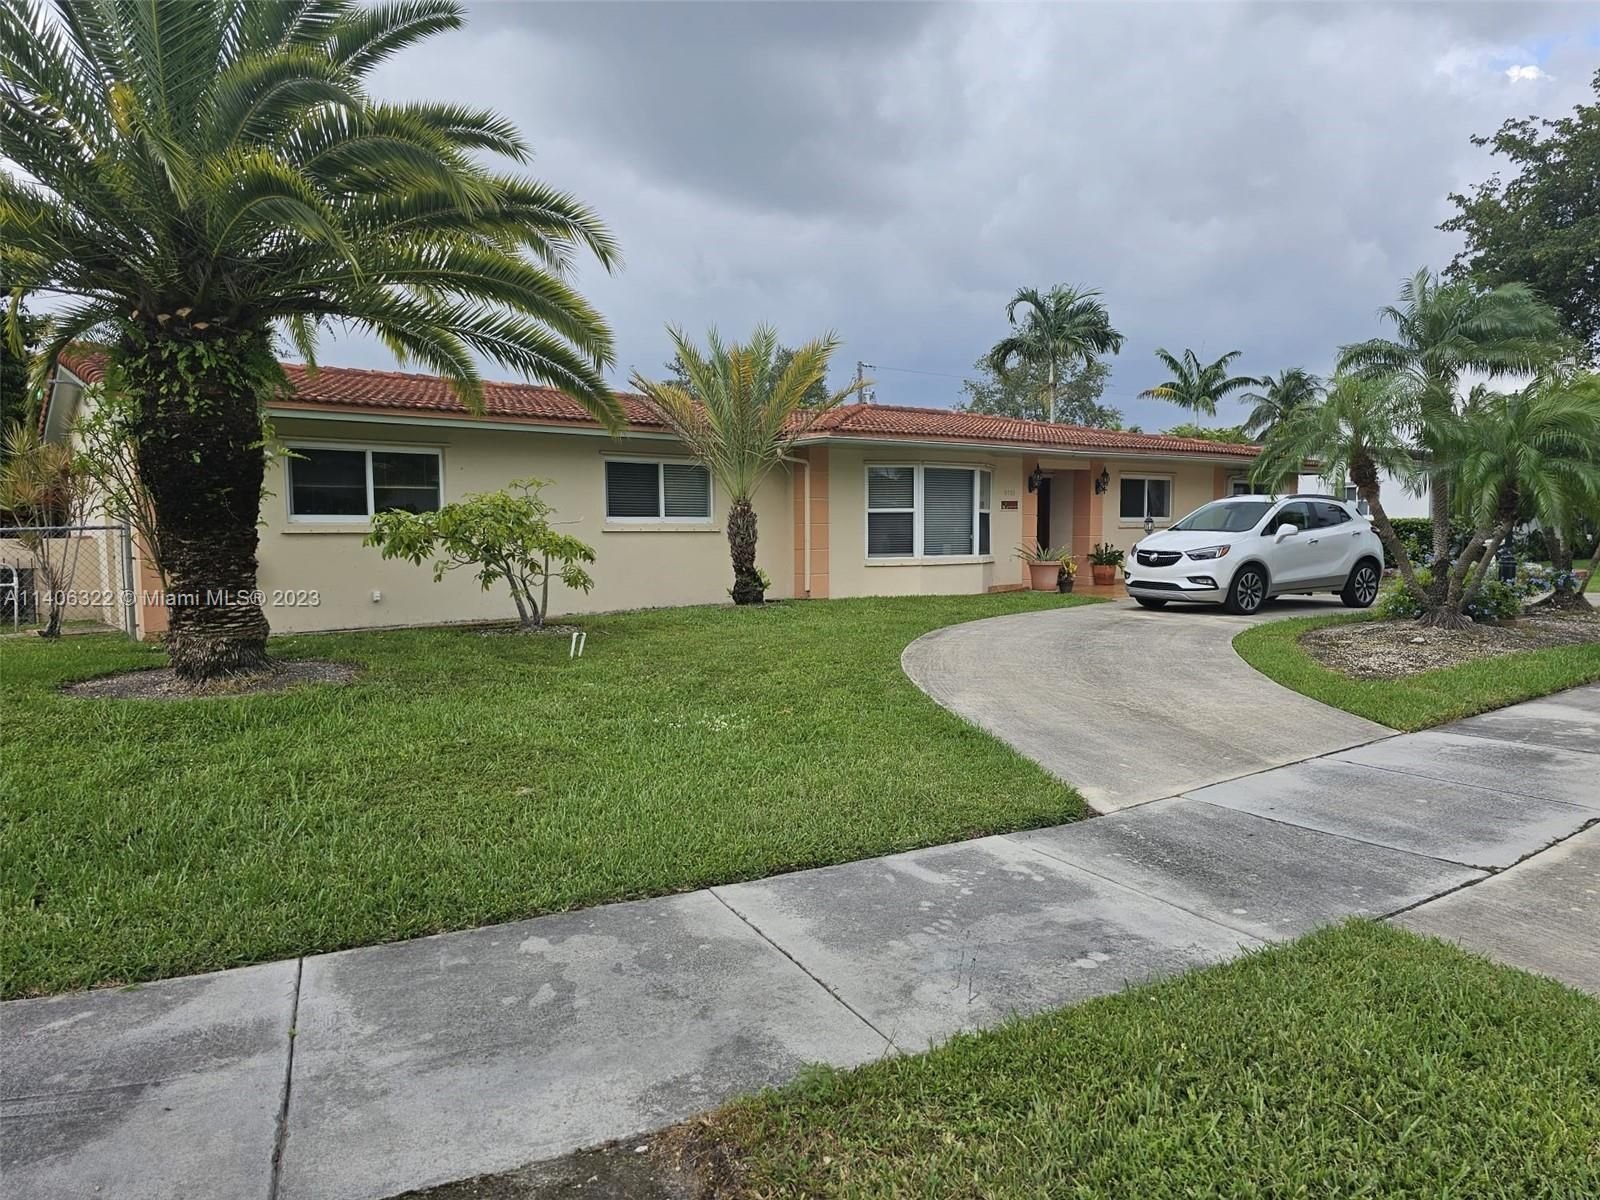 Real estate property located at 8720 86th Ave, Miami-Dade County, Miami, FL